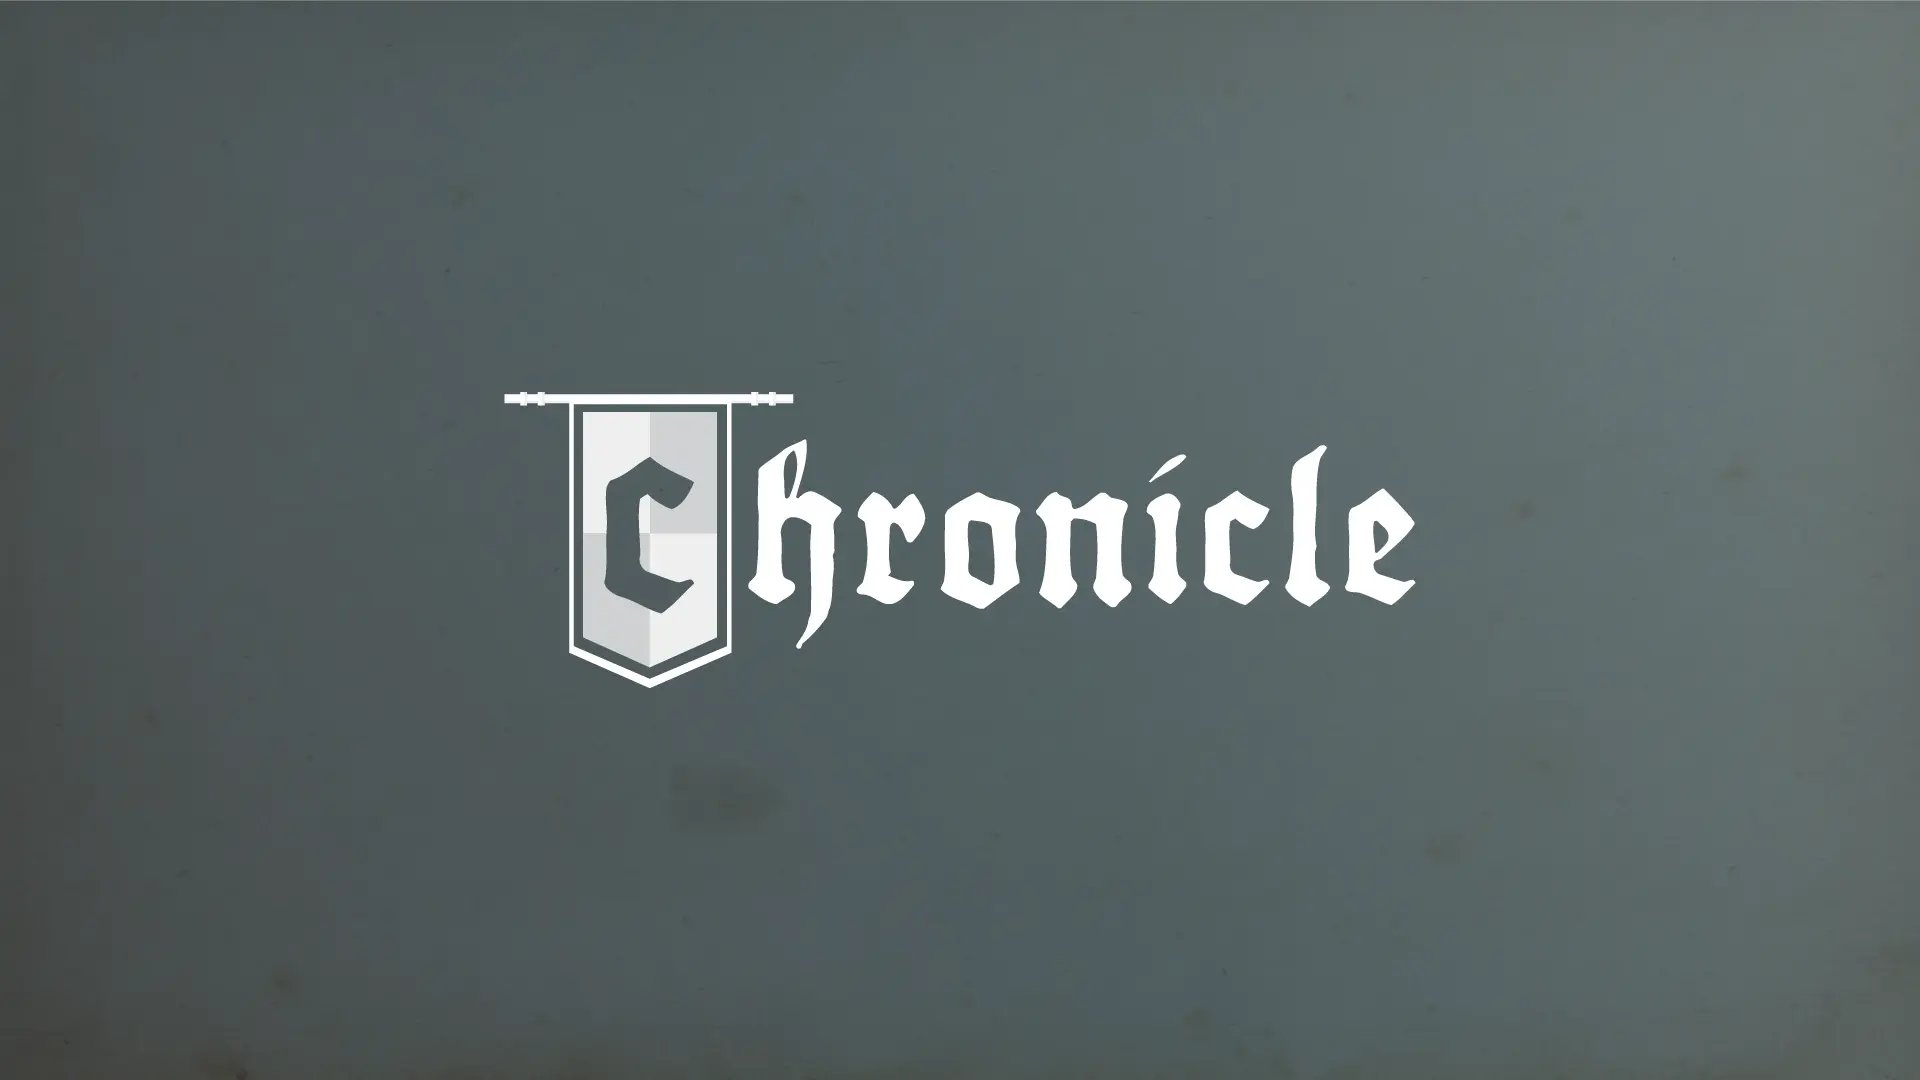 chronicle